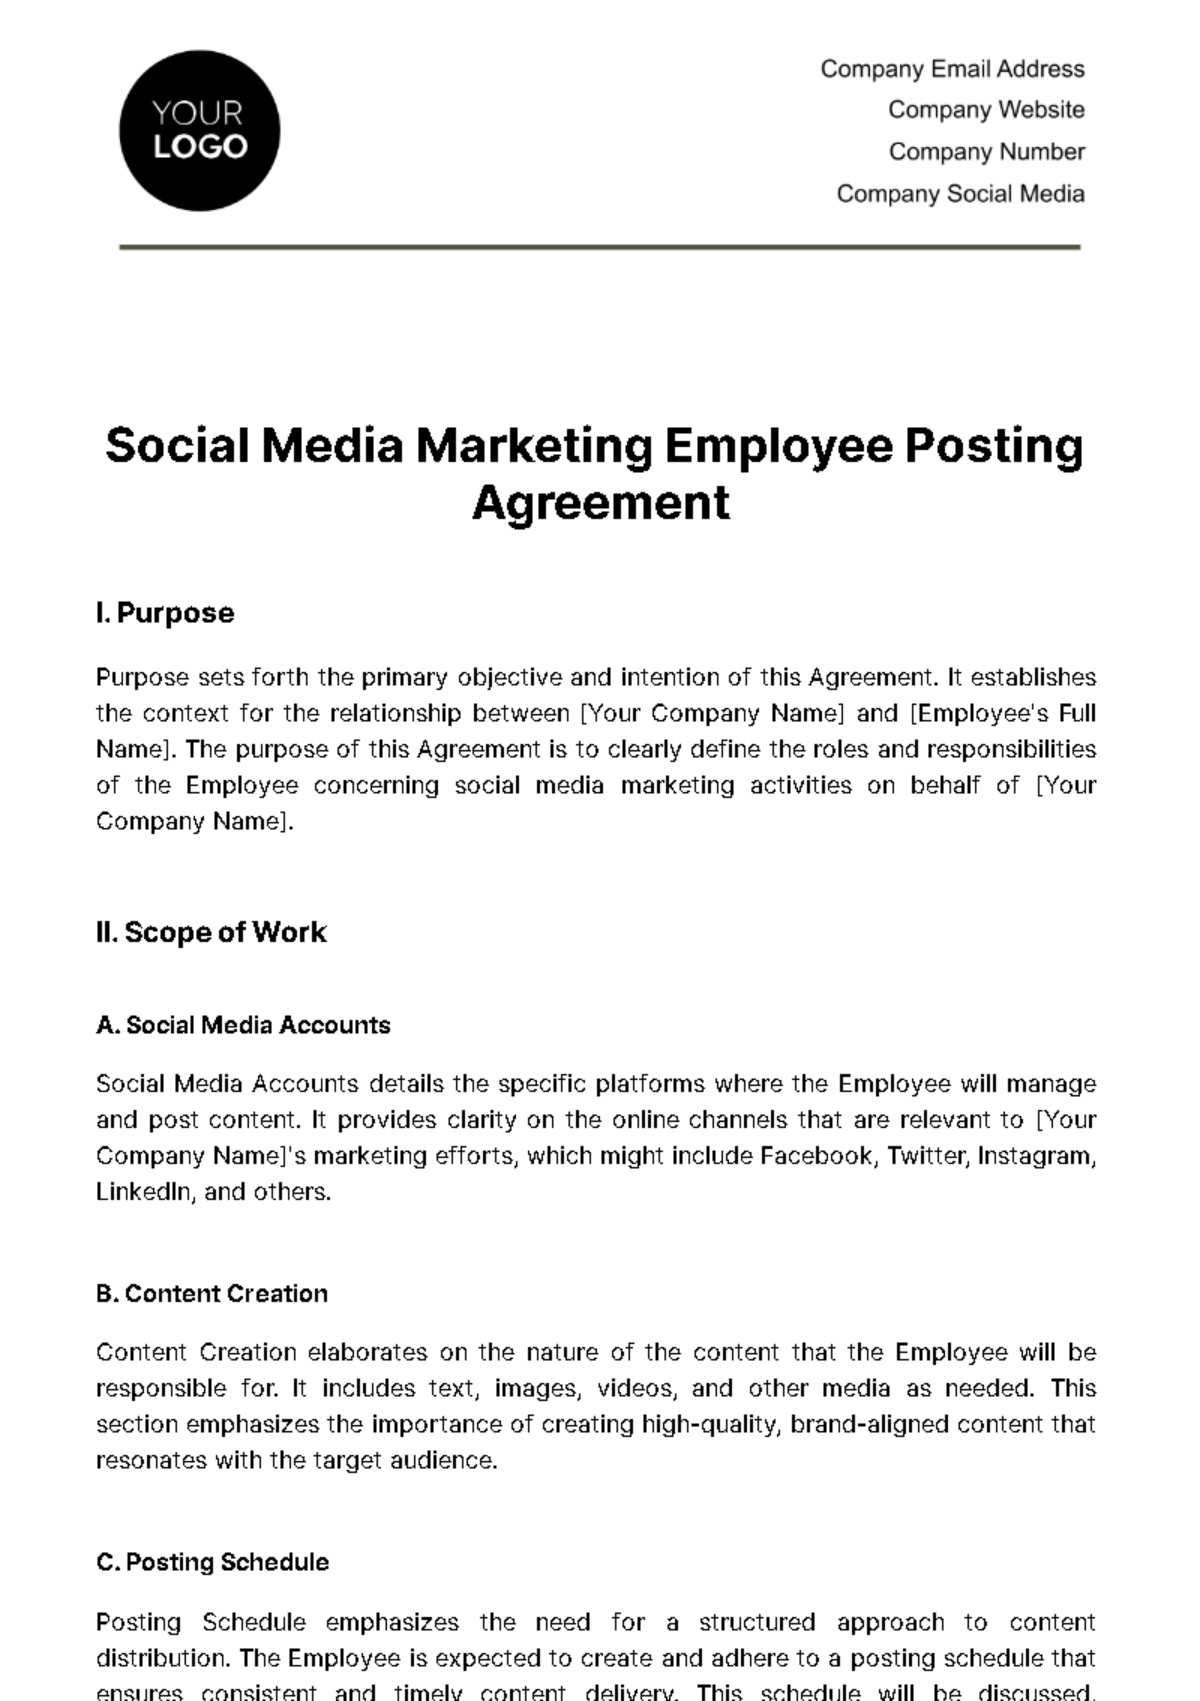 Social Media Marketing Employee Posting Agreement Template